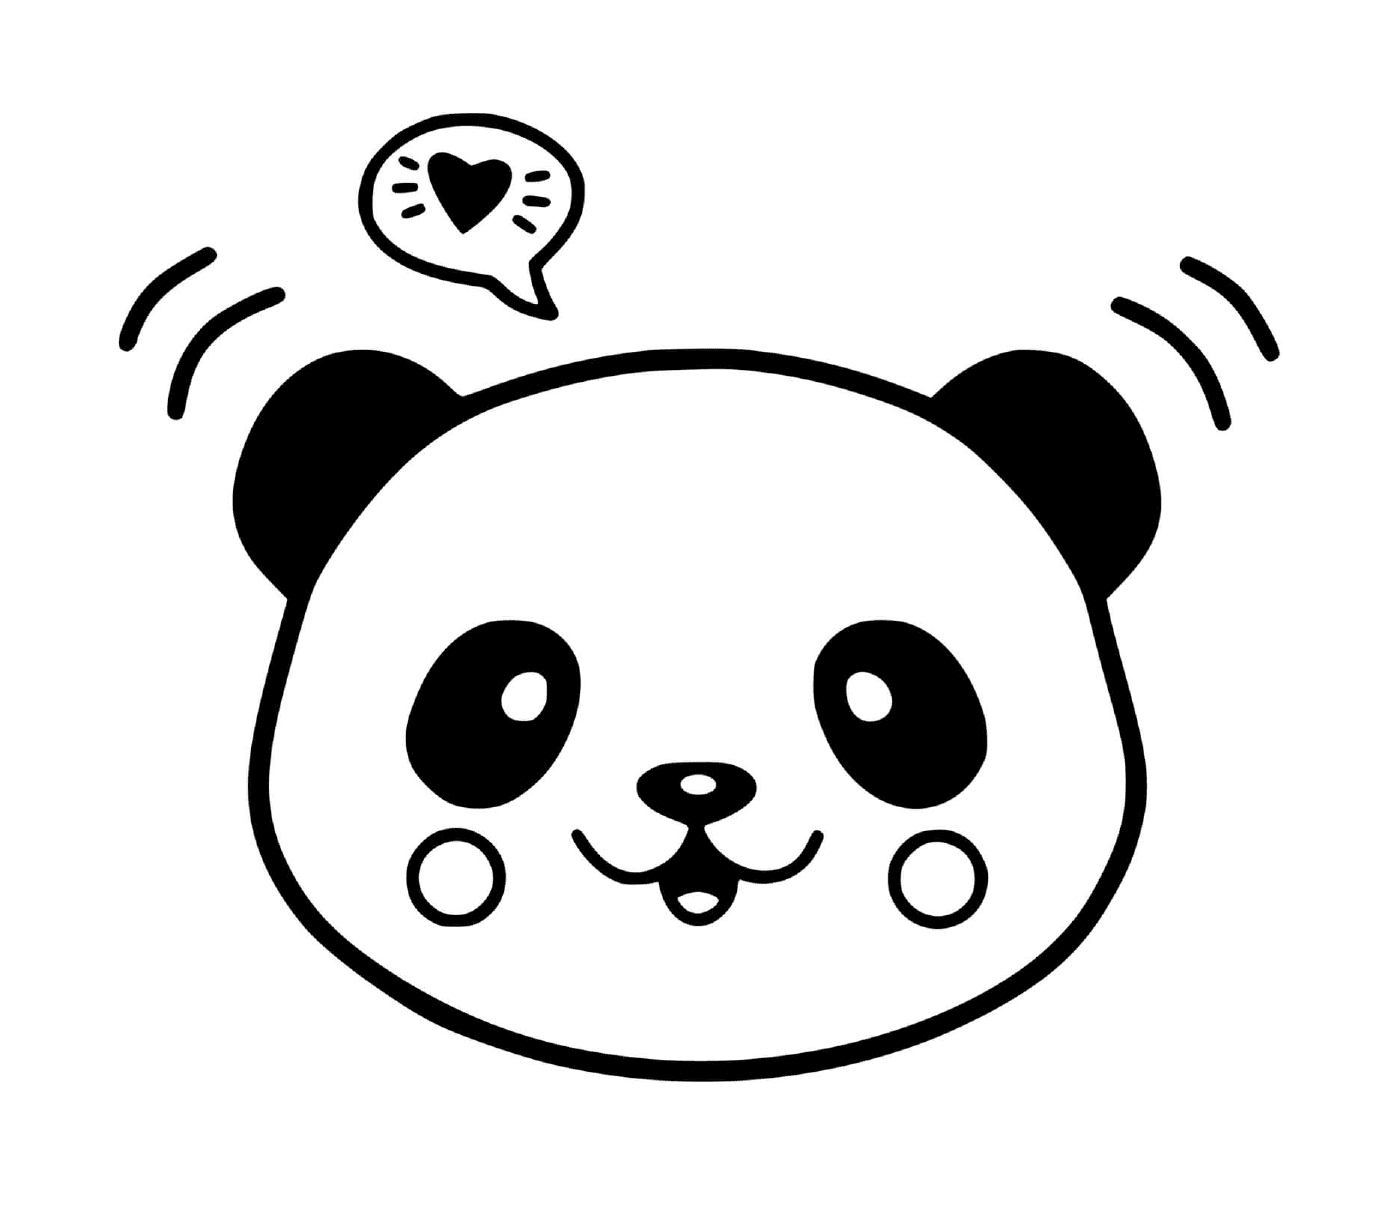   Un panda 